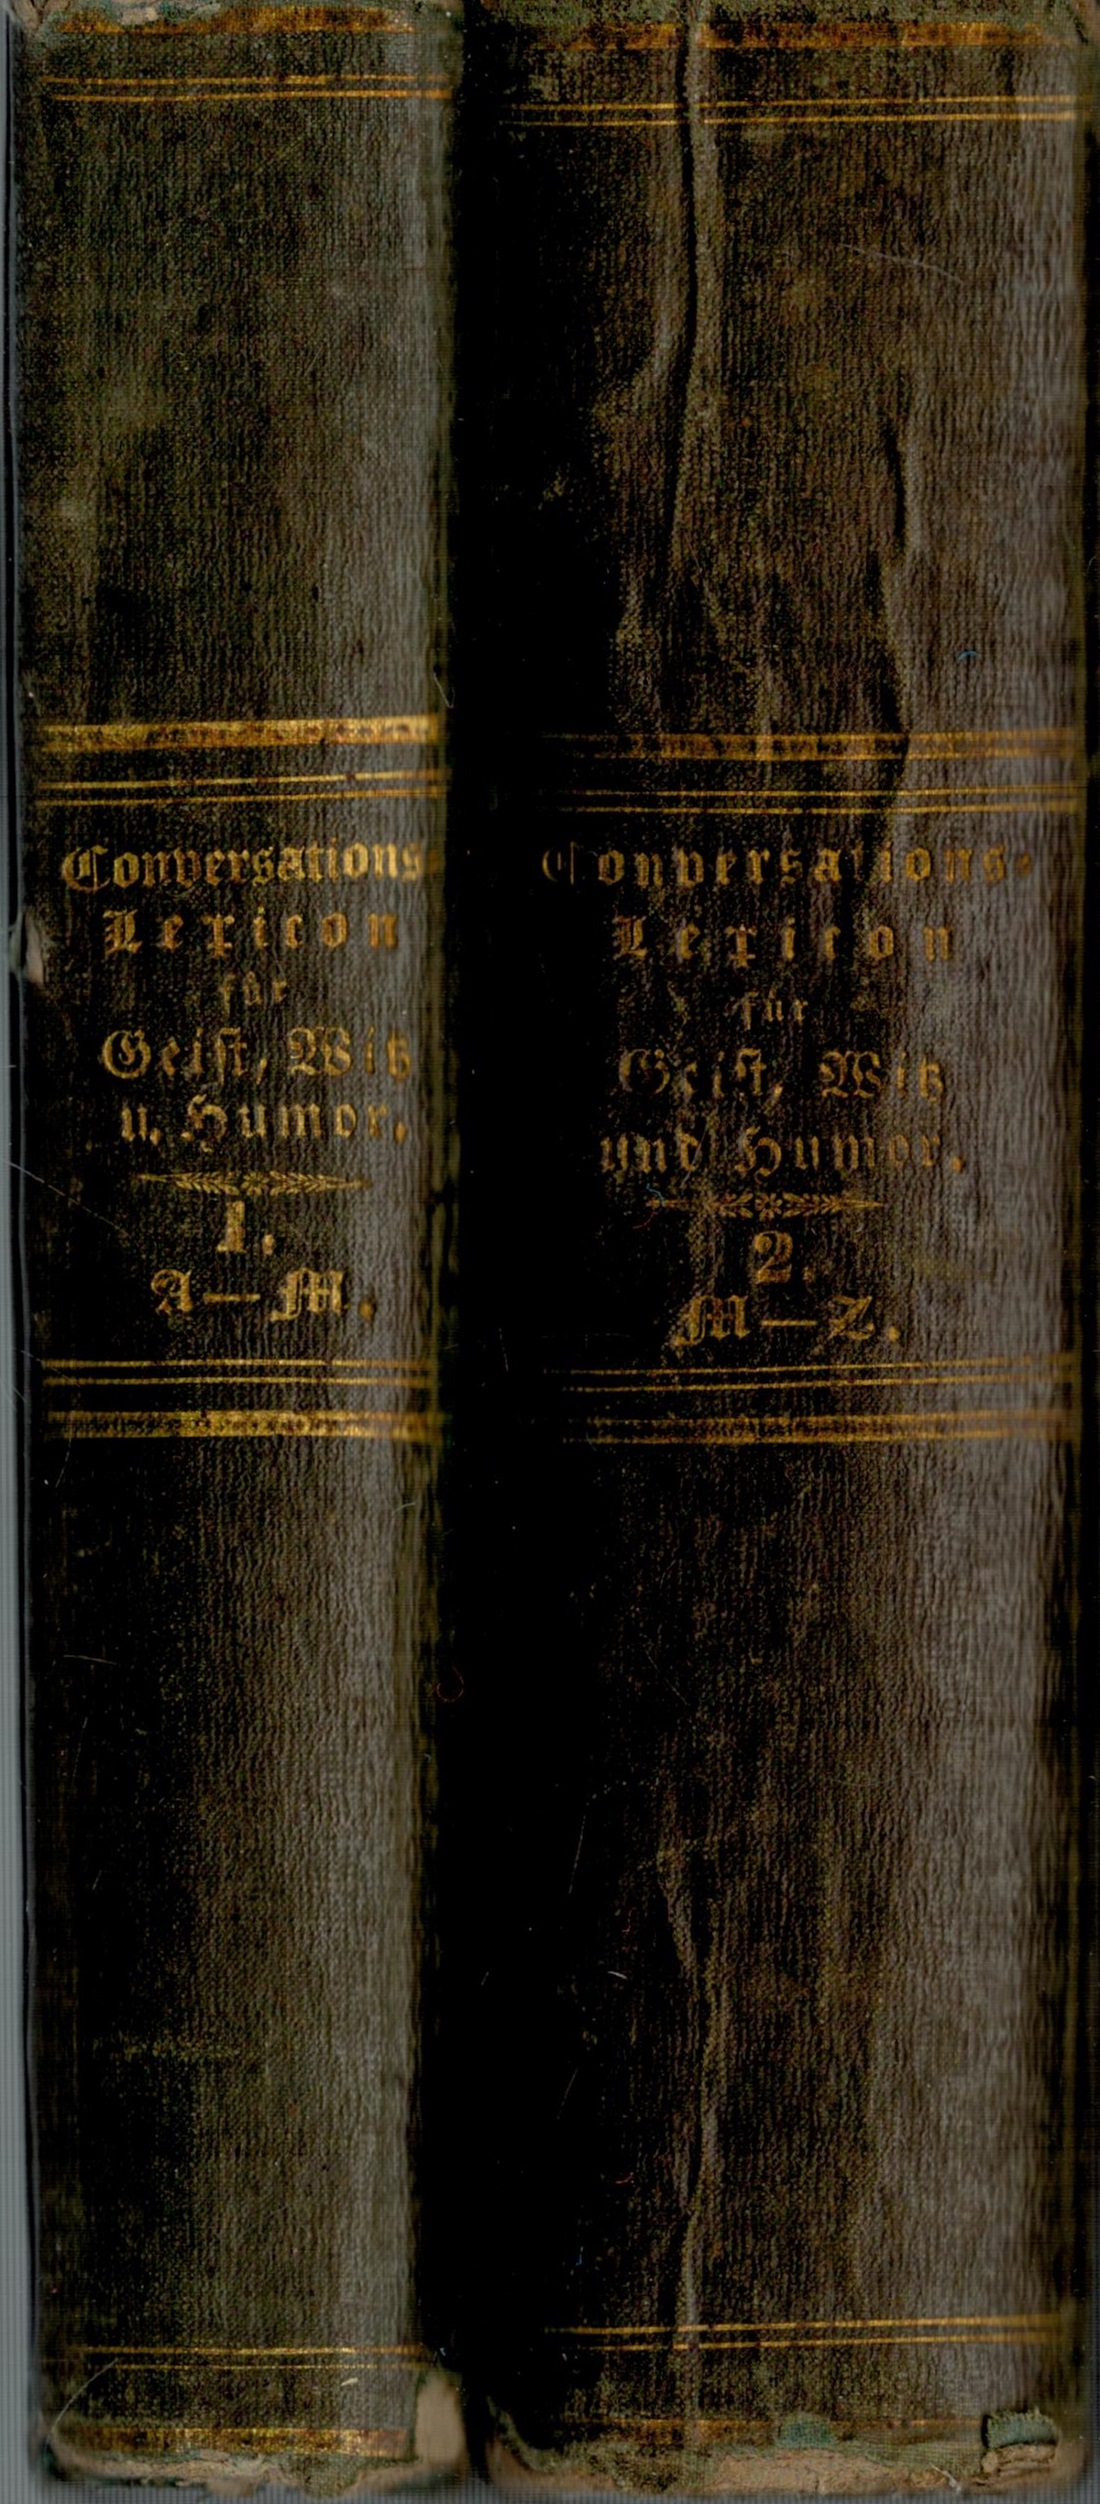 Volume 1 = Conversations. Von M. Saphir published in Dresden, Germany, 1852. 752 pages 6"x 9".